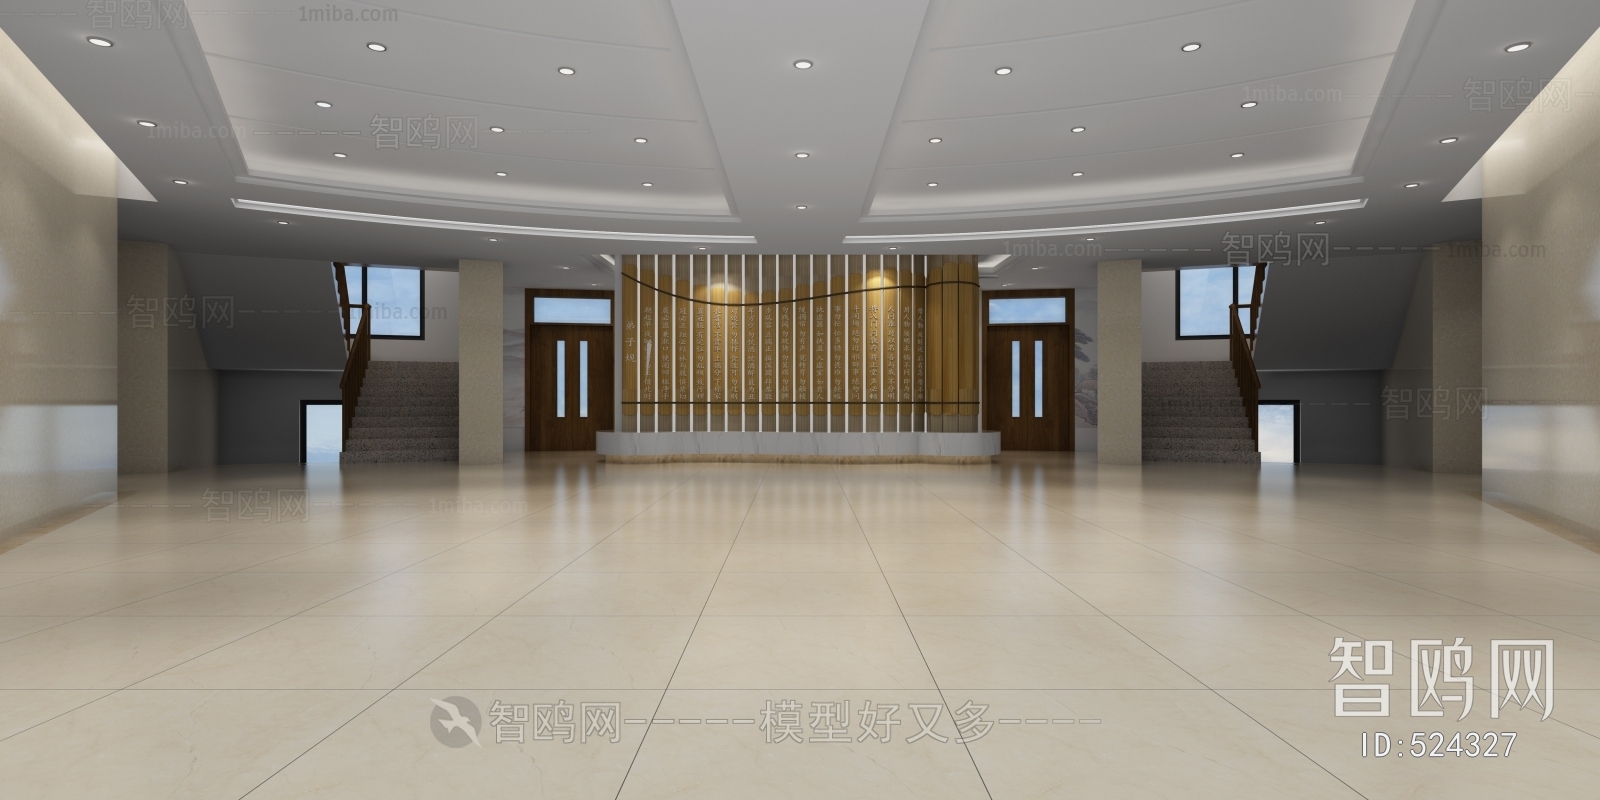 Modern Lobby Hall